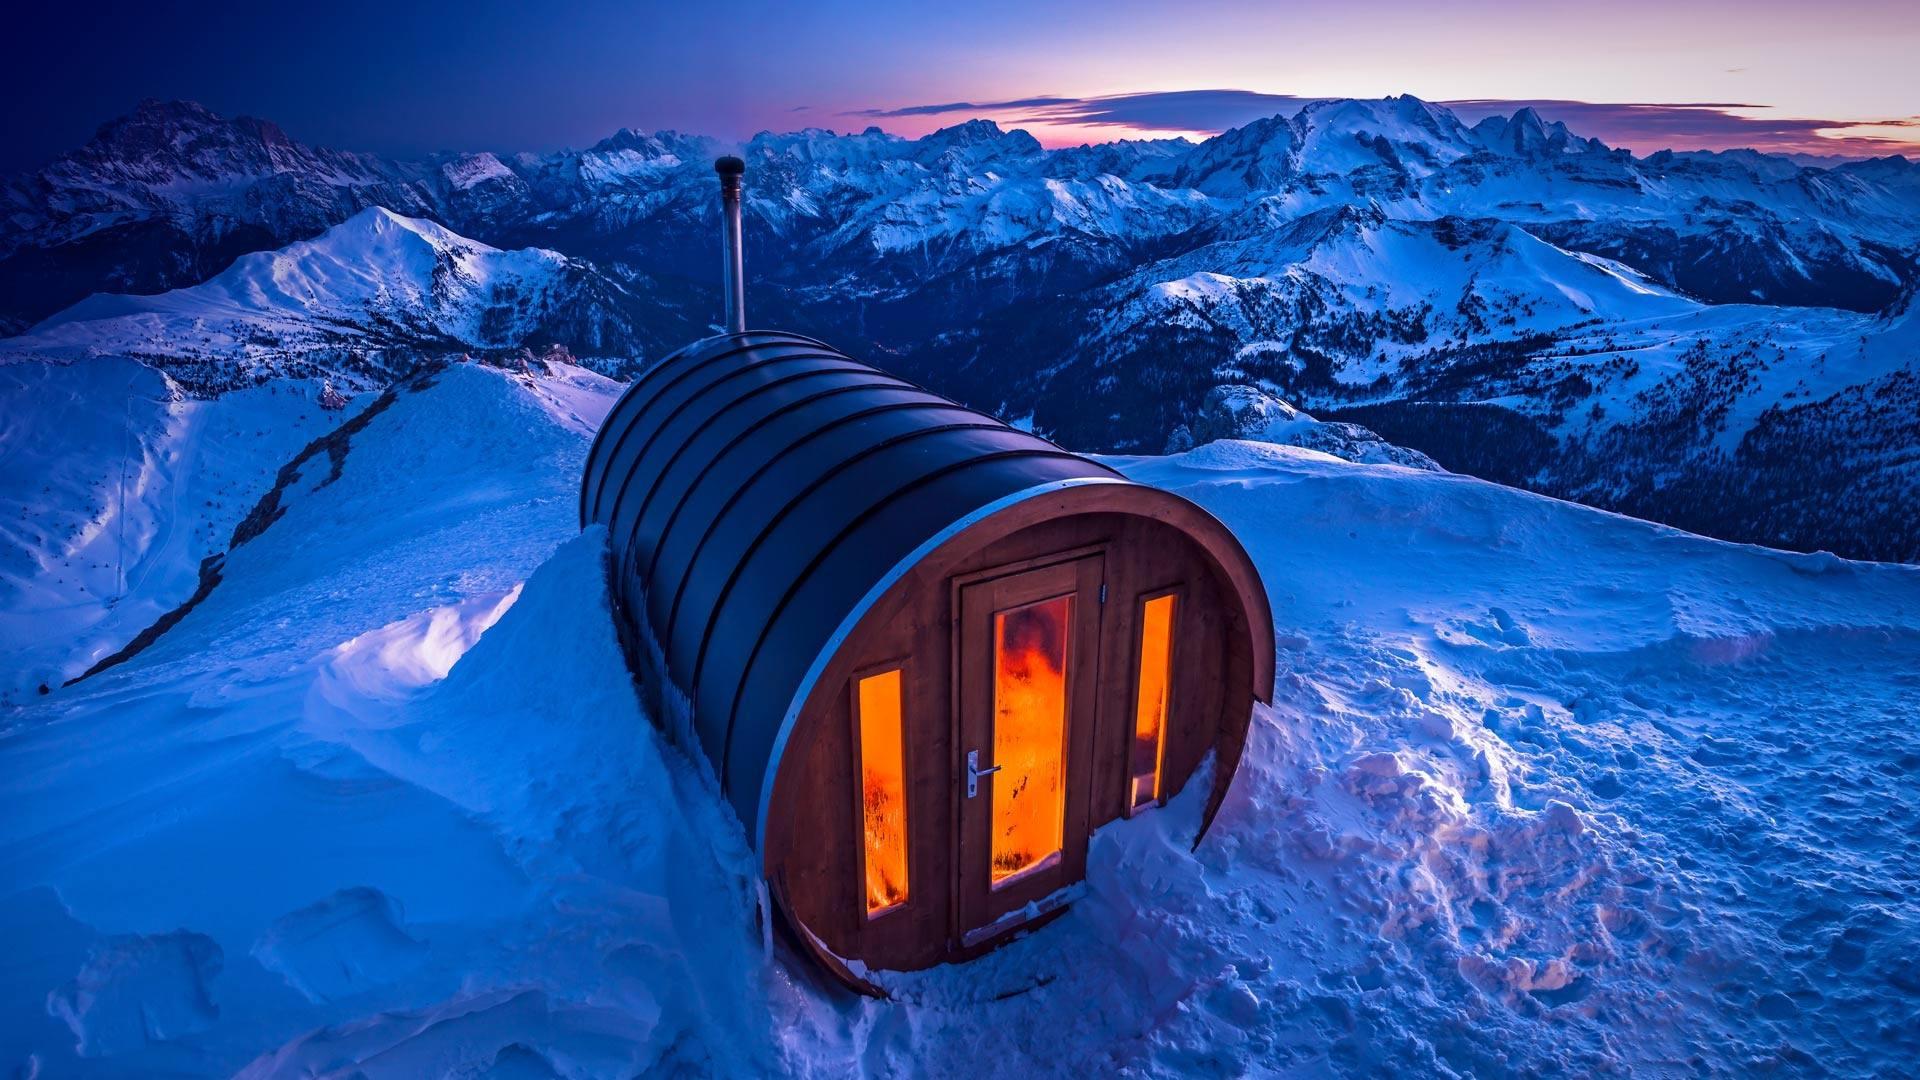 Wallpaper Italy, Dolomites, sauna house, snow, winter